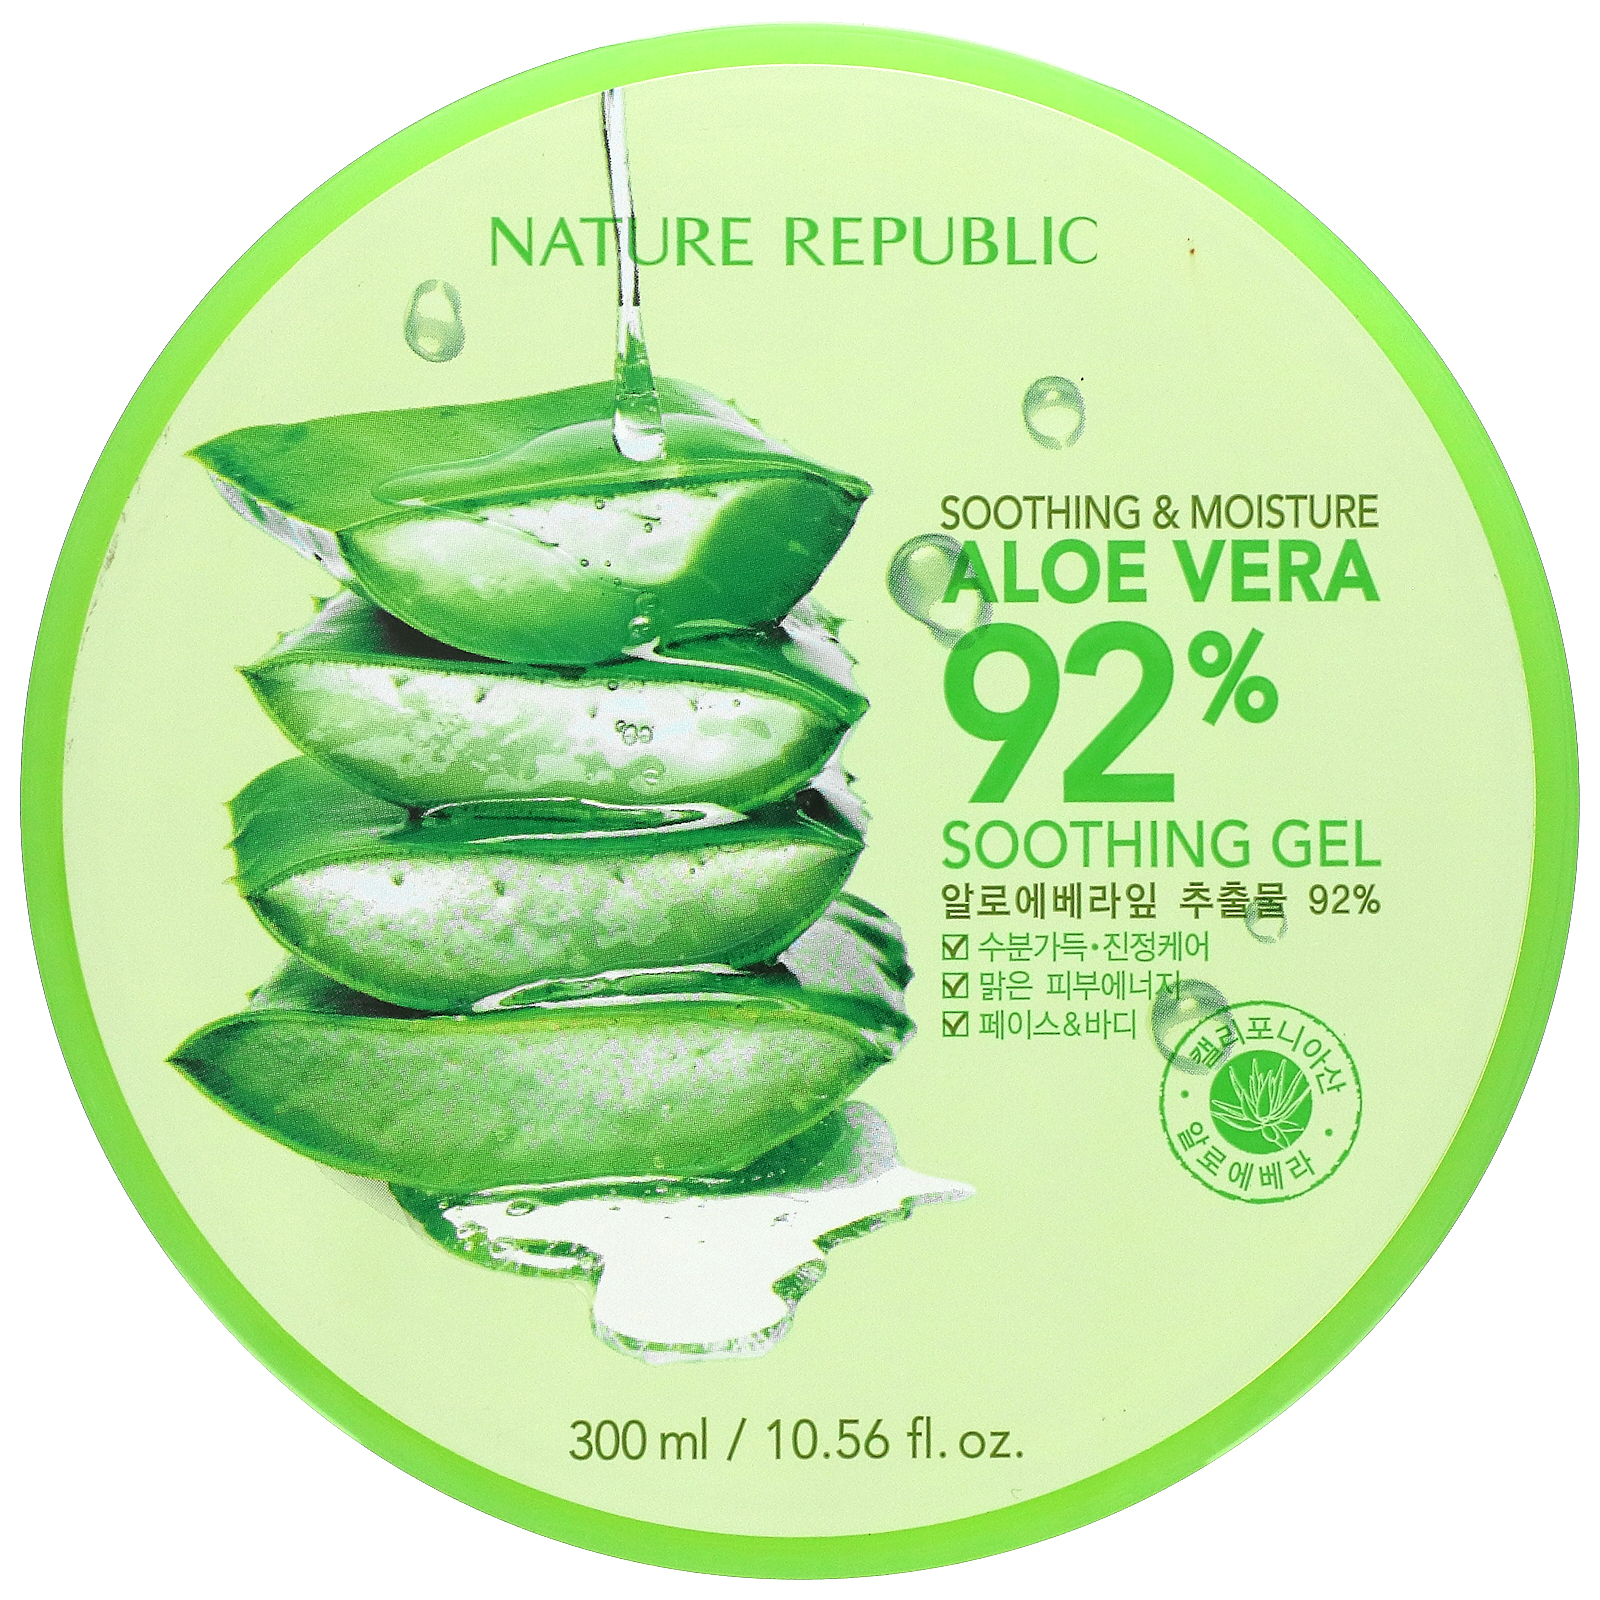 Hysterisk Søjle kighul Nature Republic, Soothing & Moisture Aloe Vera 92% Soothing Gel, 10.56 fl  oz (300 ml)